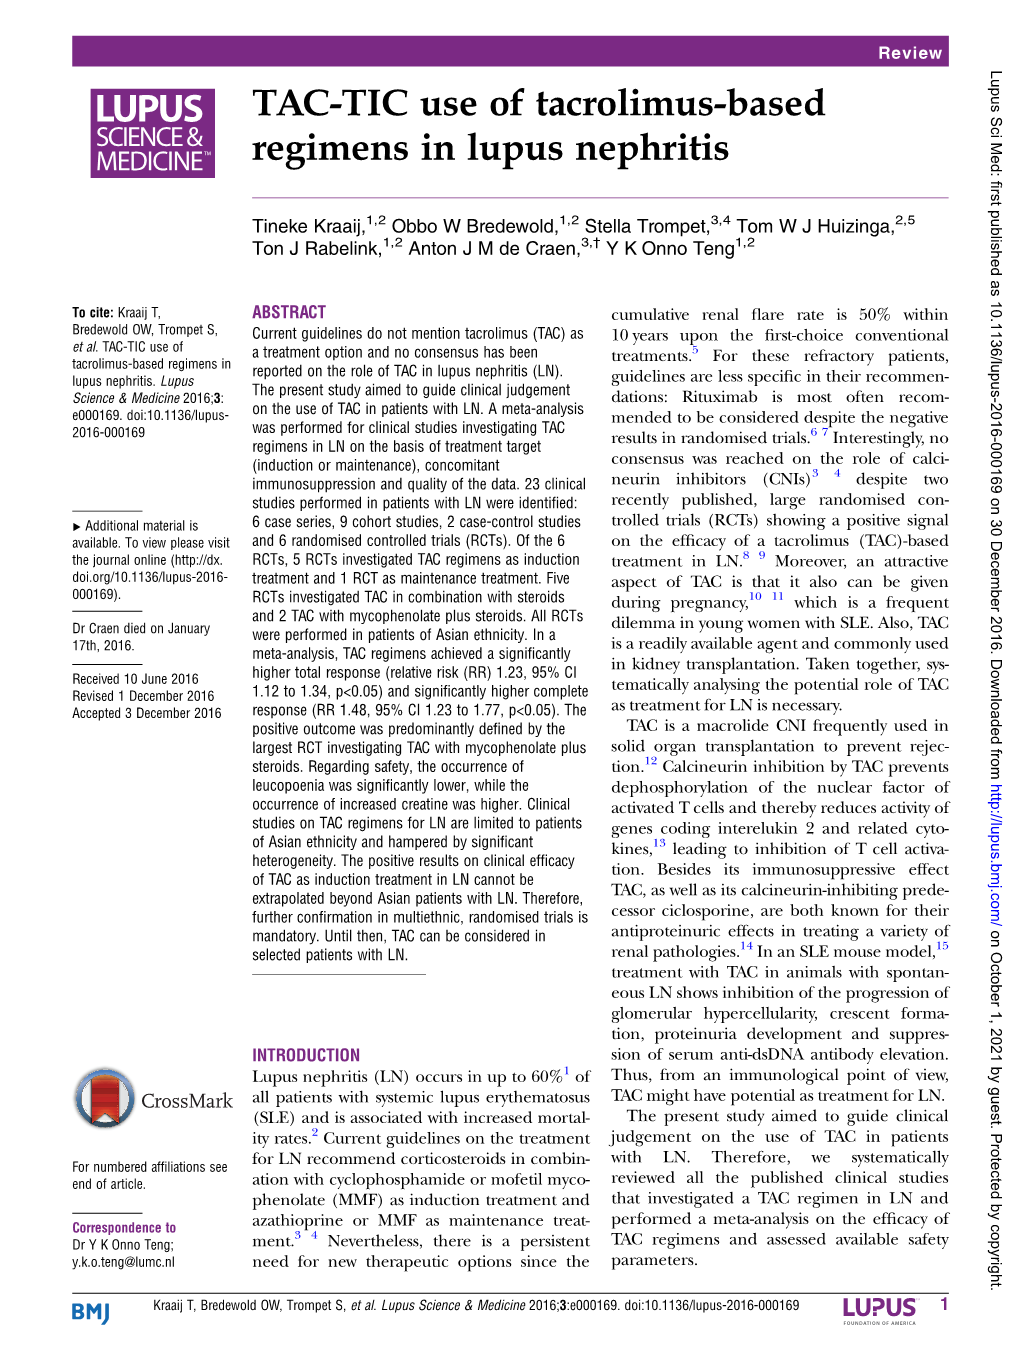 TAC-TIC Use of Tacrolimus-Based Regimens in Lupus Nephritis